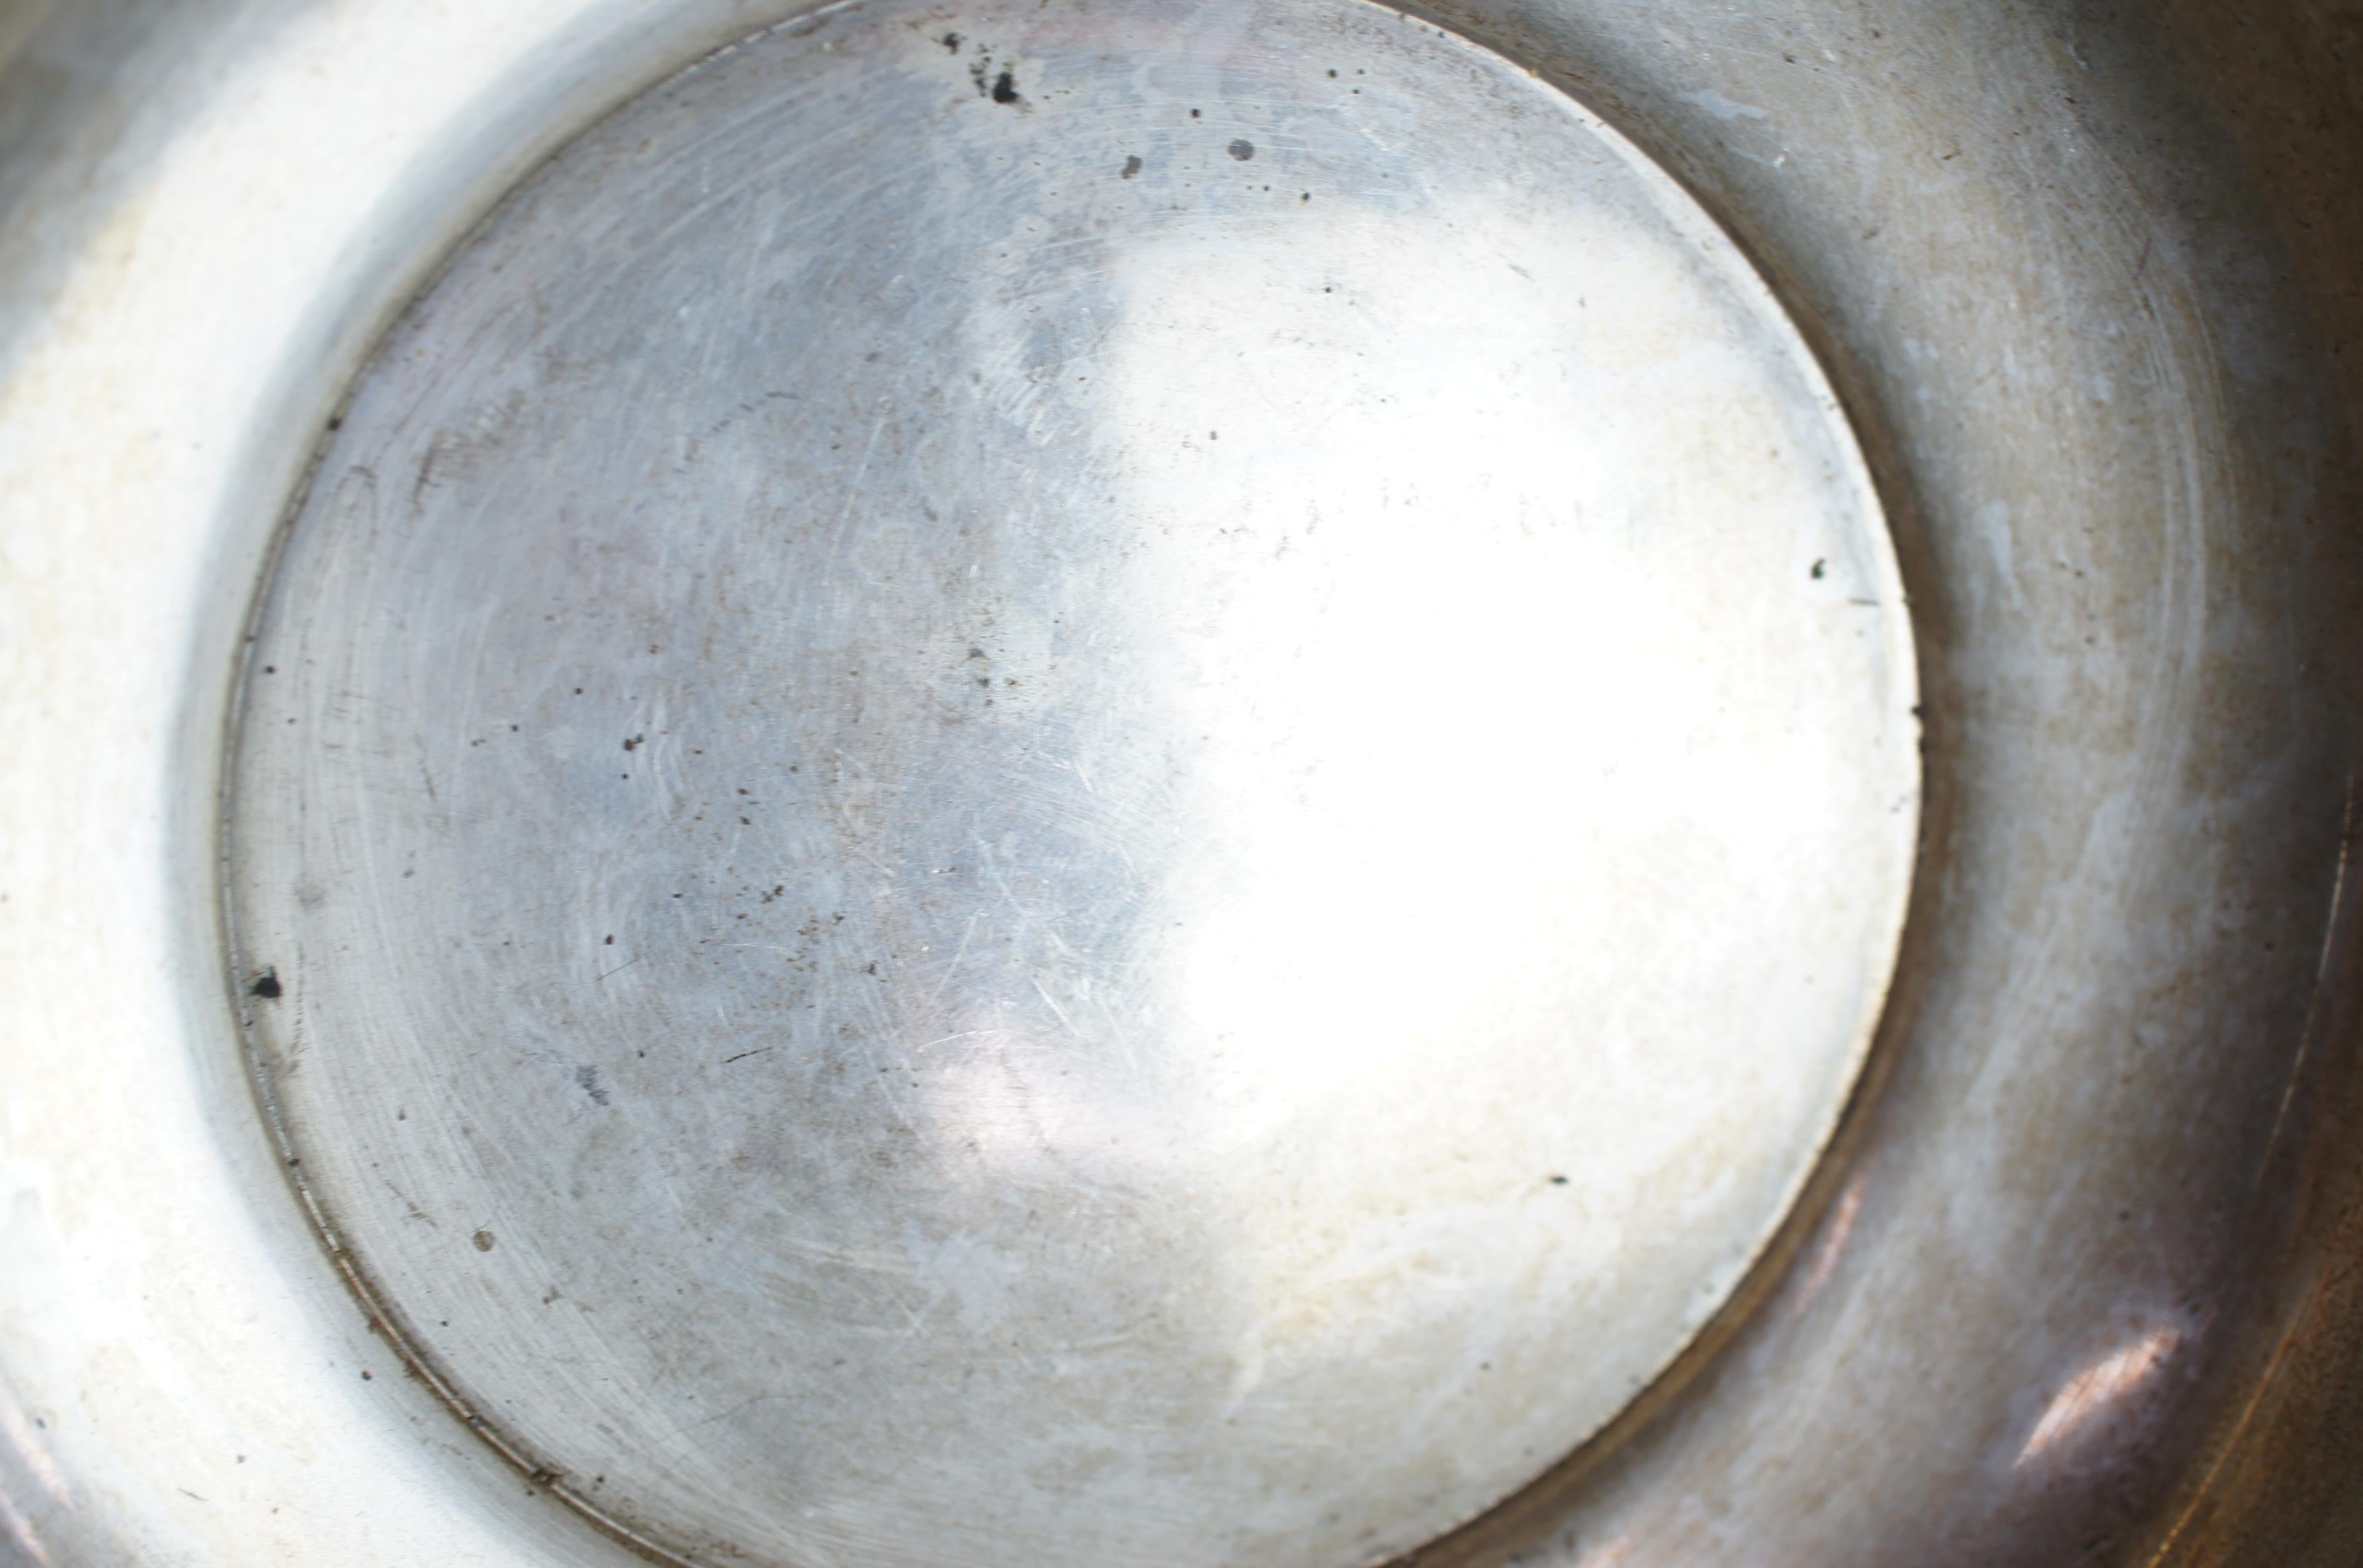 gorham sterling silver bowl